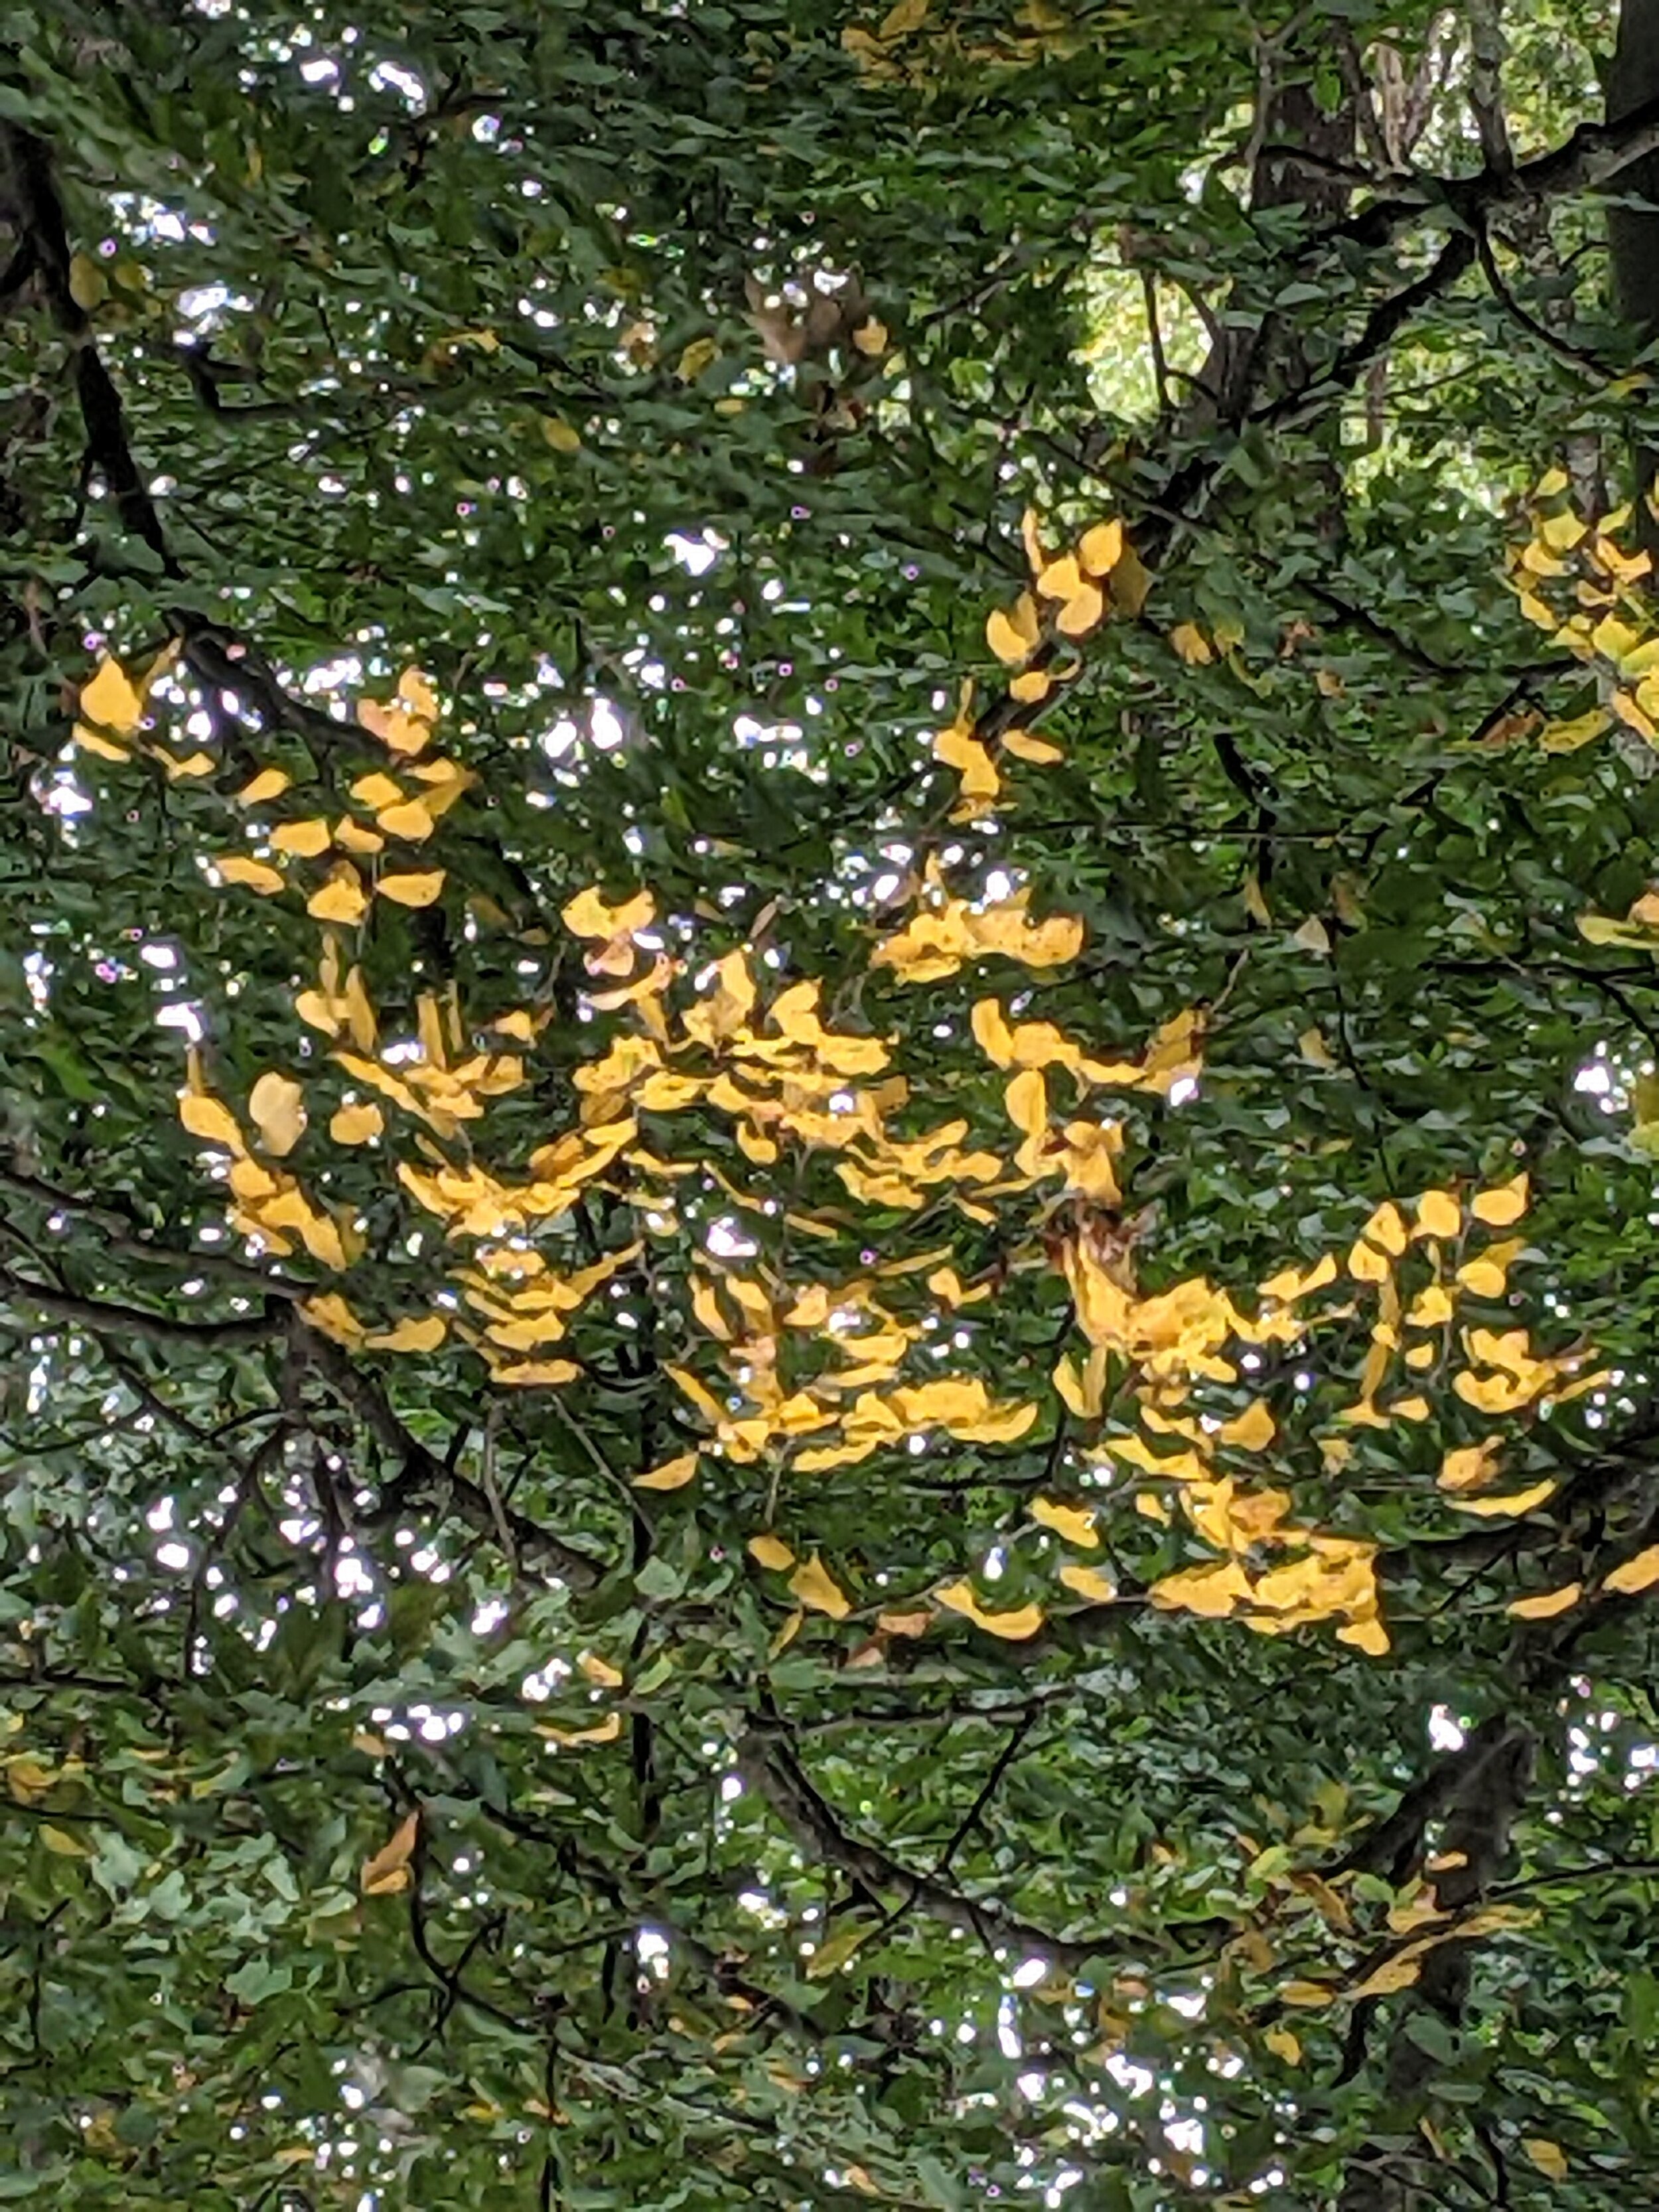 4.) Yellow Leaf - PA, US